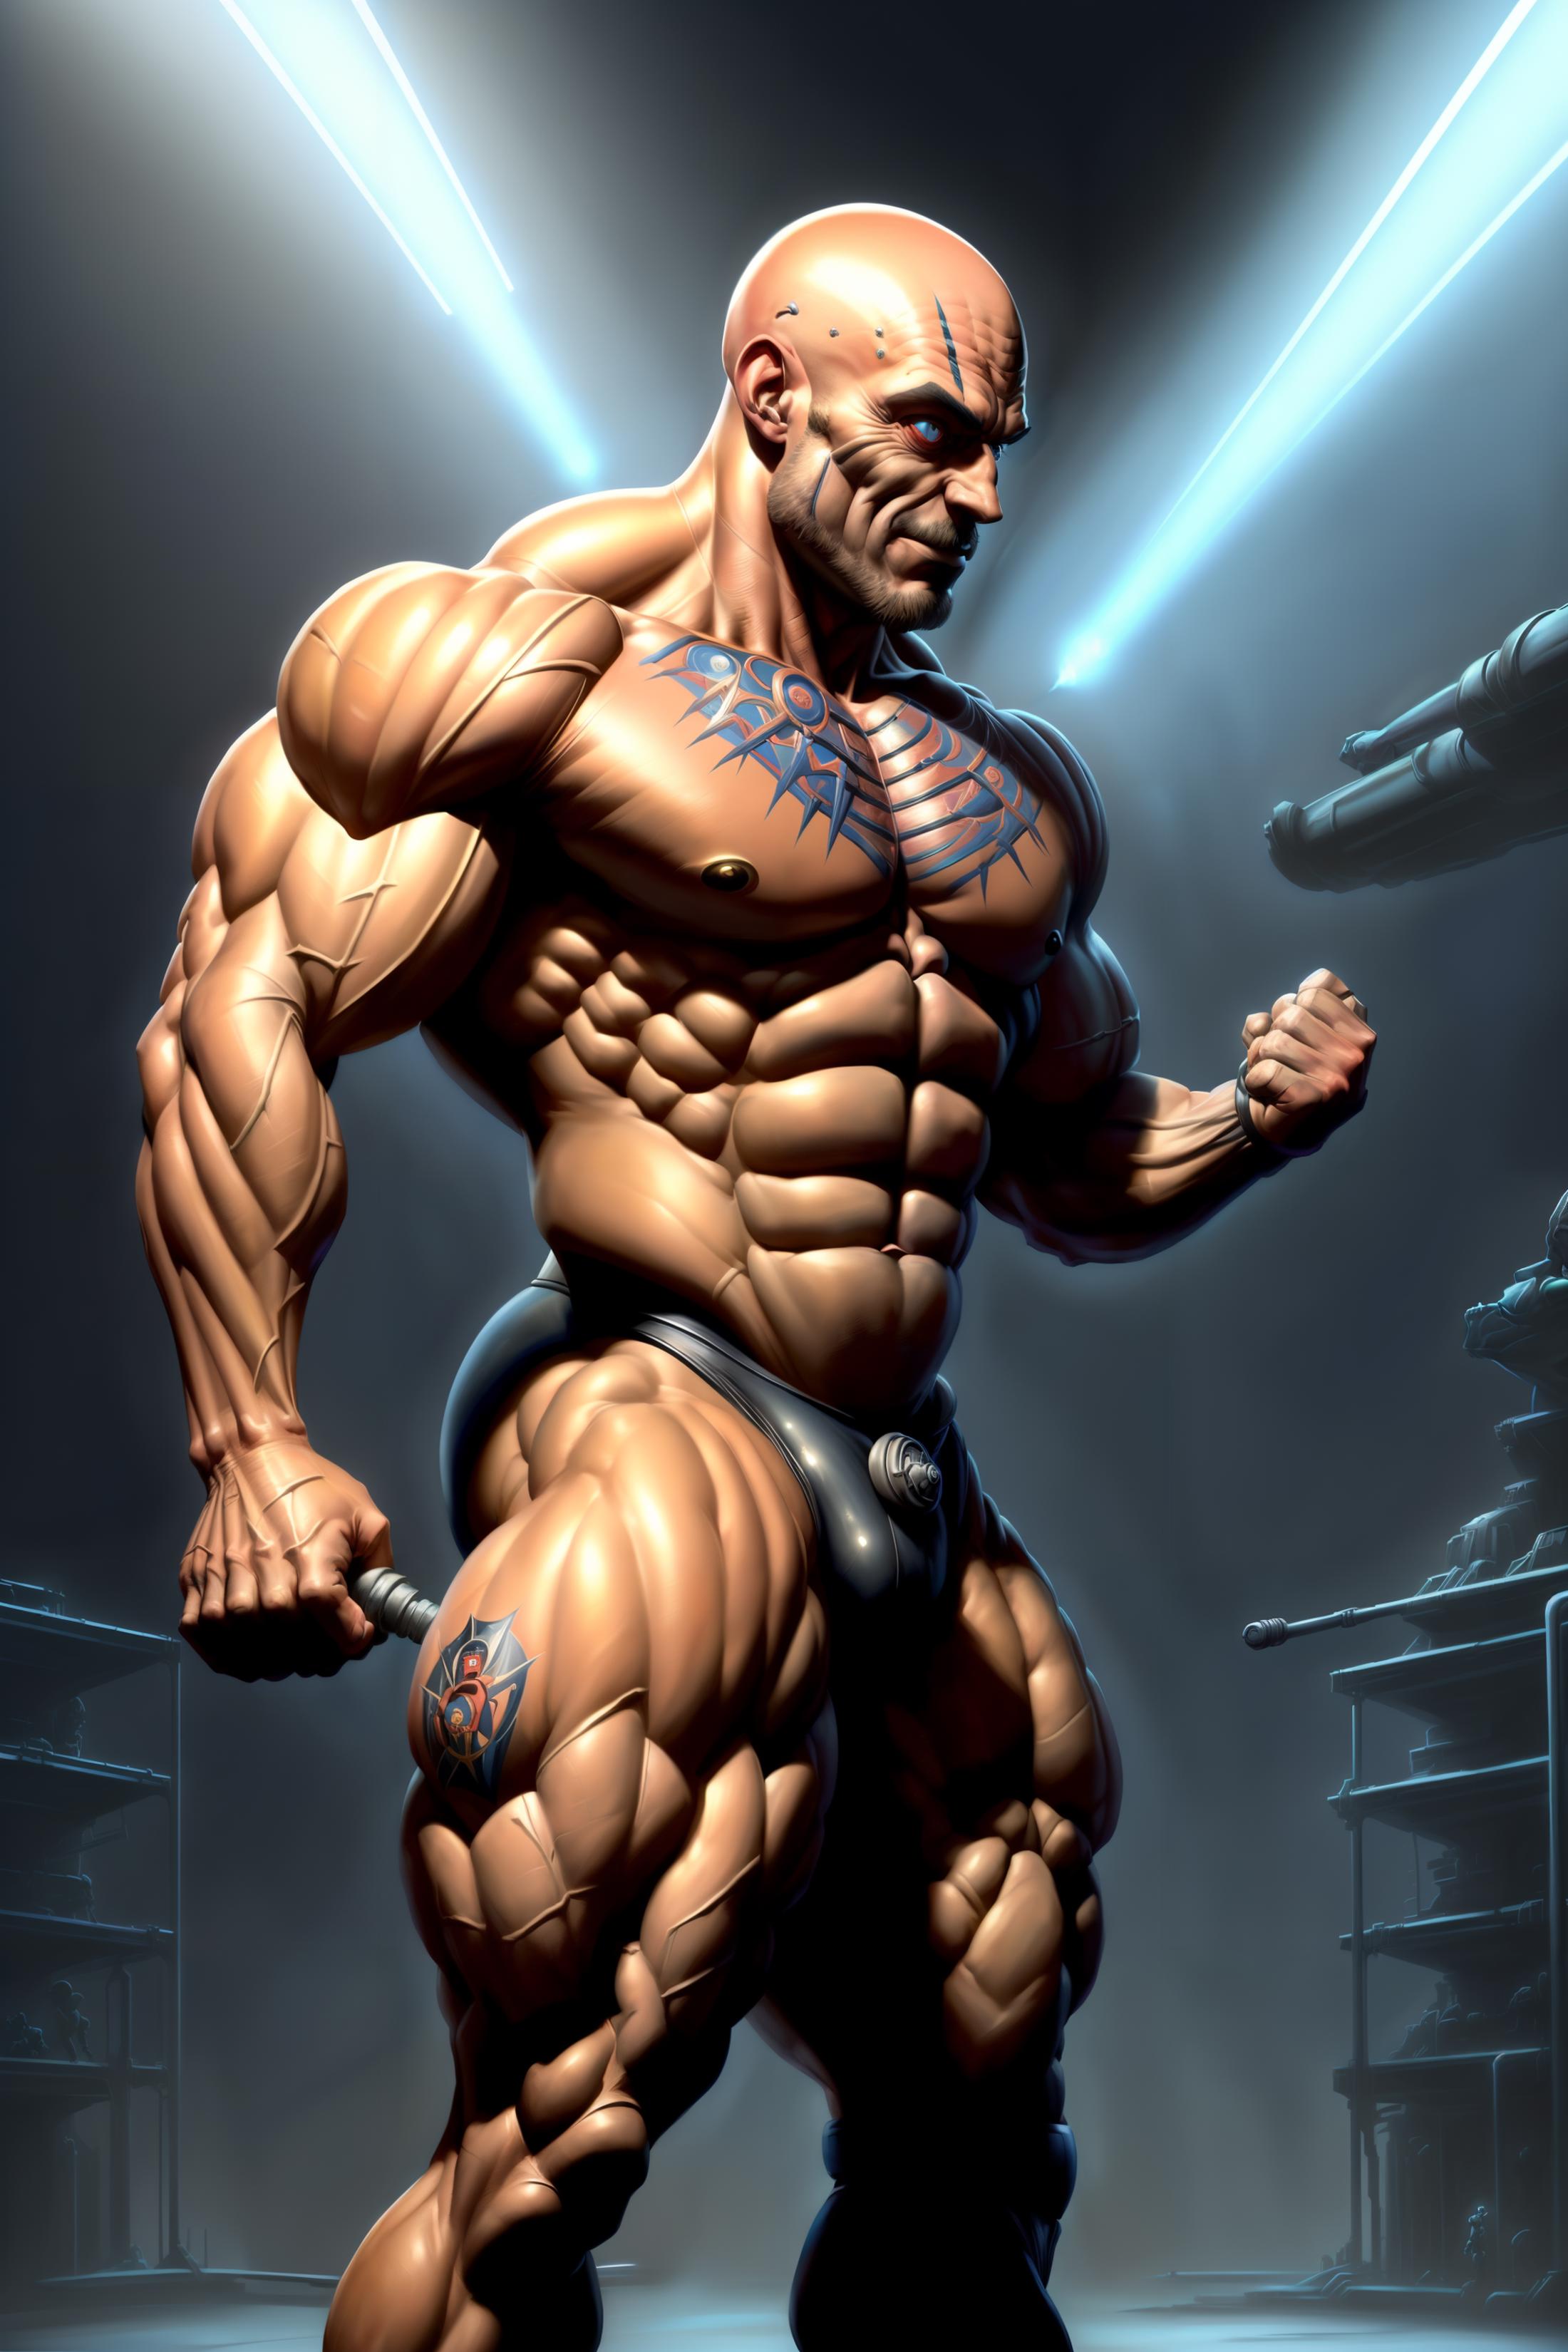 BulkedUp AI (Huge Muscles LoRA) image by Yamiel_Dash